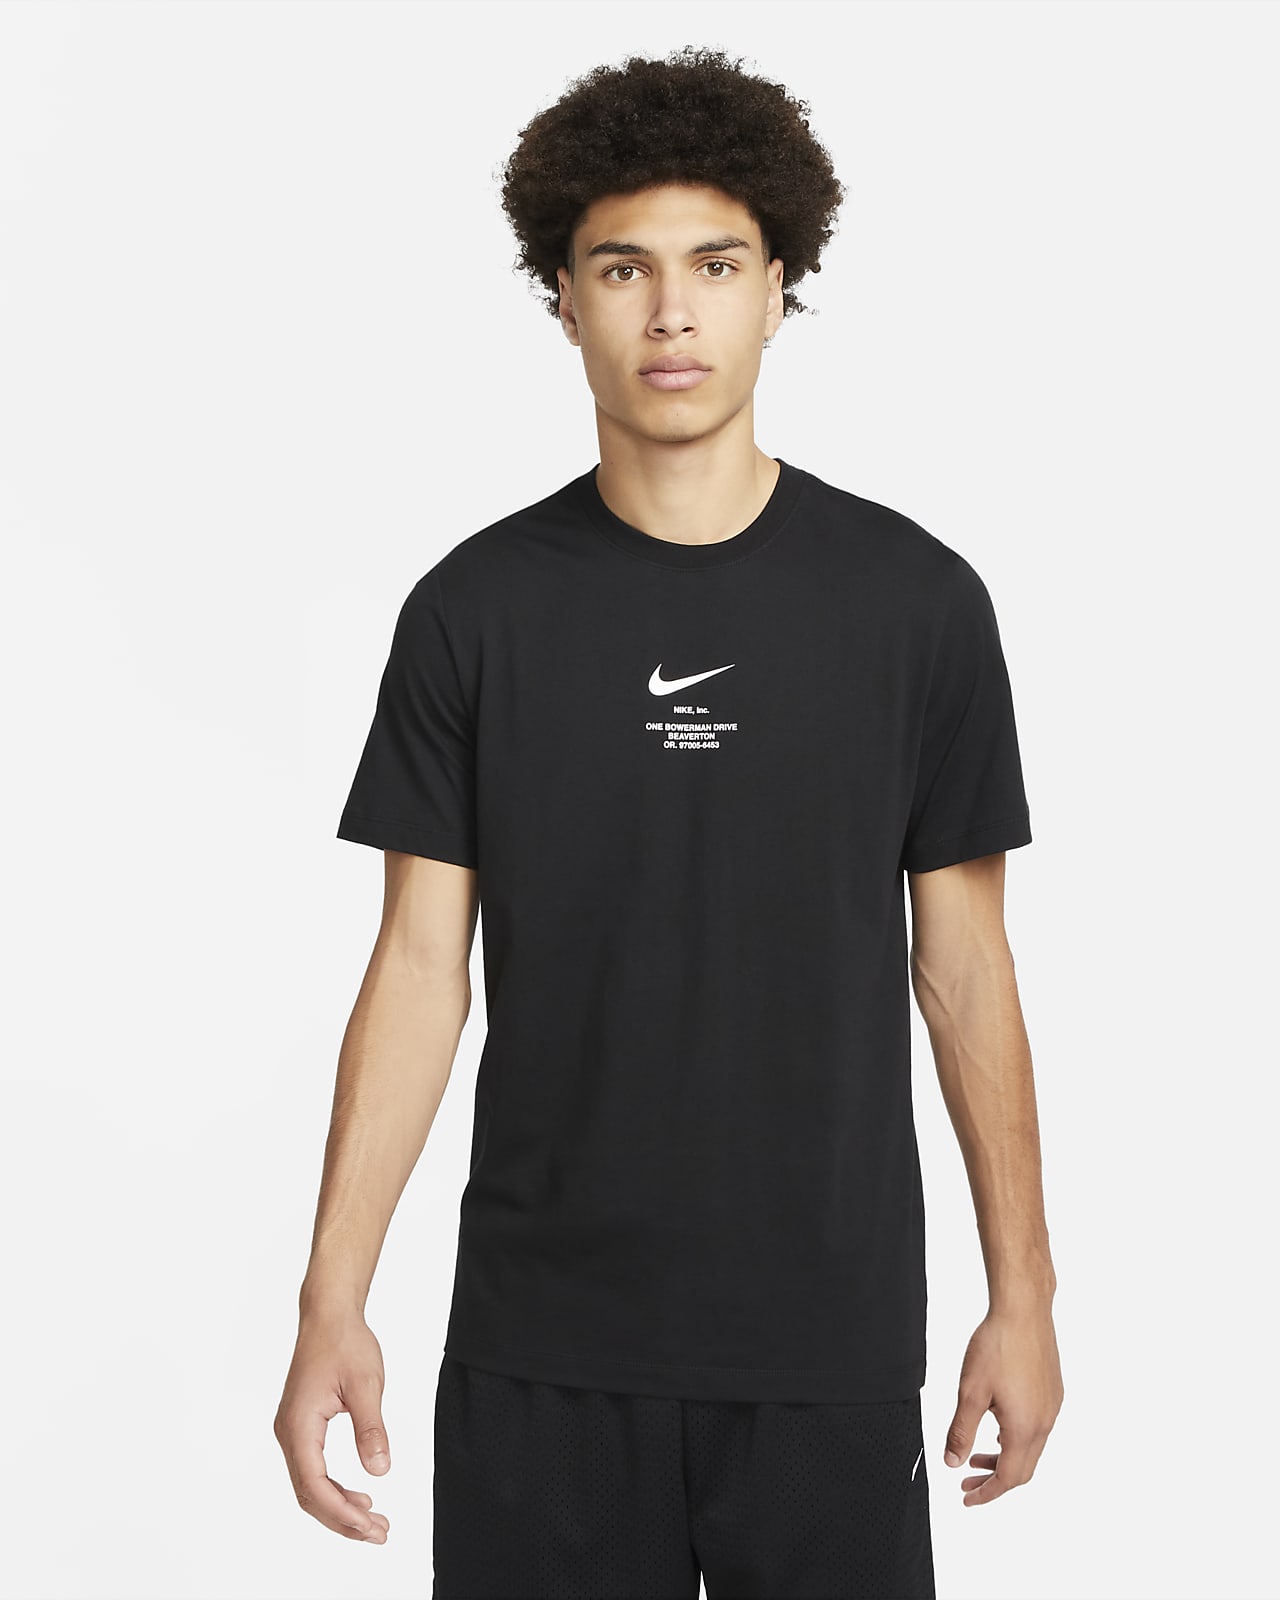 Men's T-Shirts & Tops. Nike HR